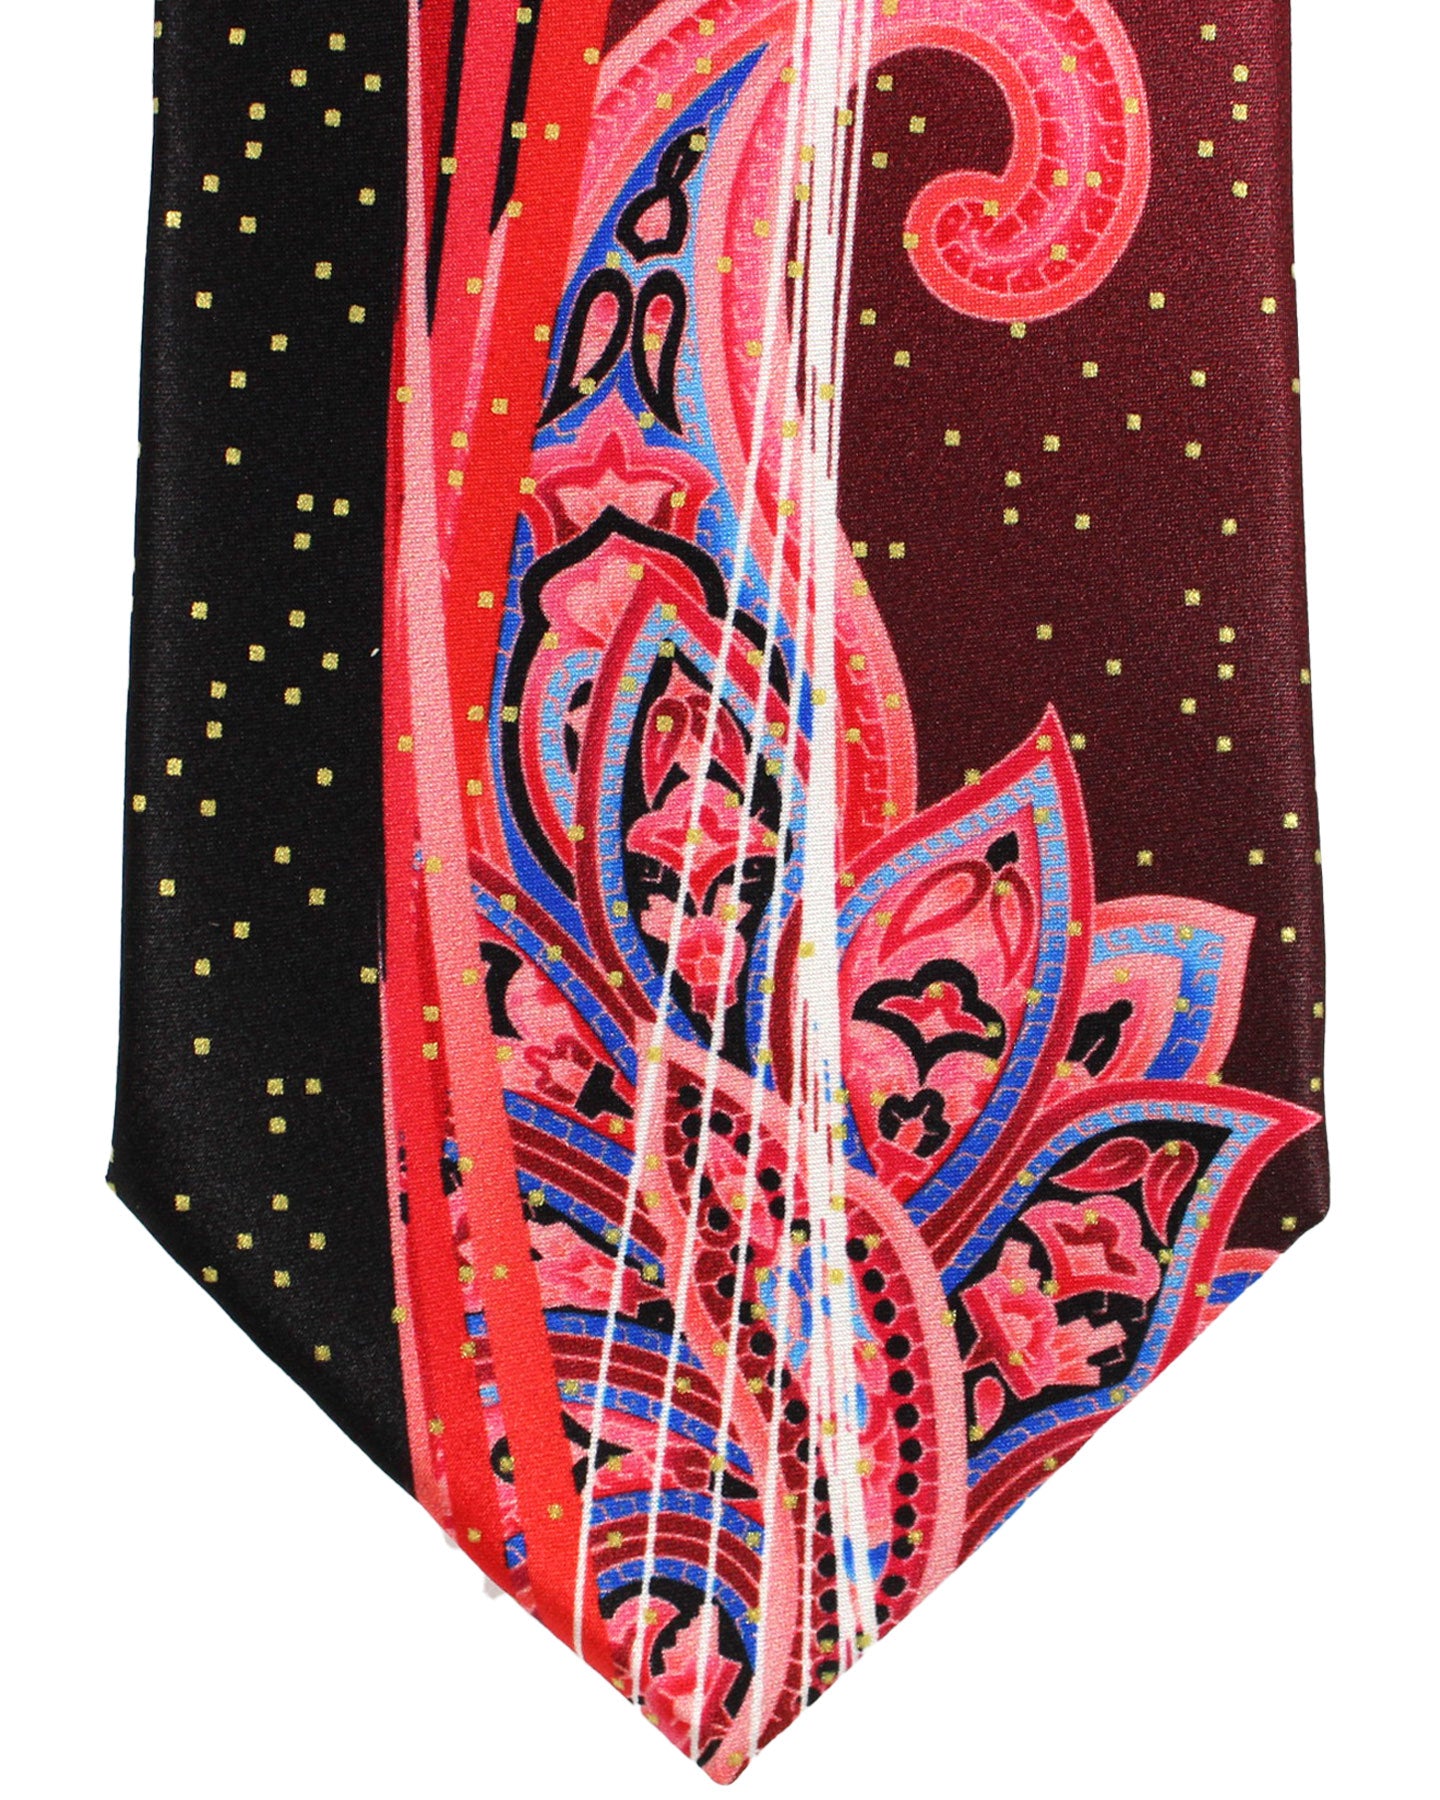 Vitaliano Pancaldi Silk Tie Red Black Swirl Paisley Design